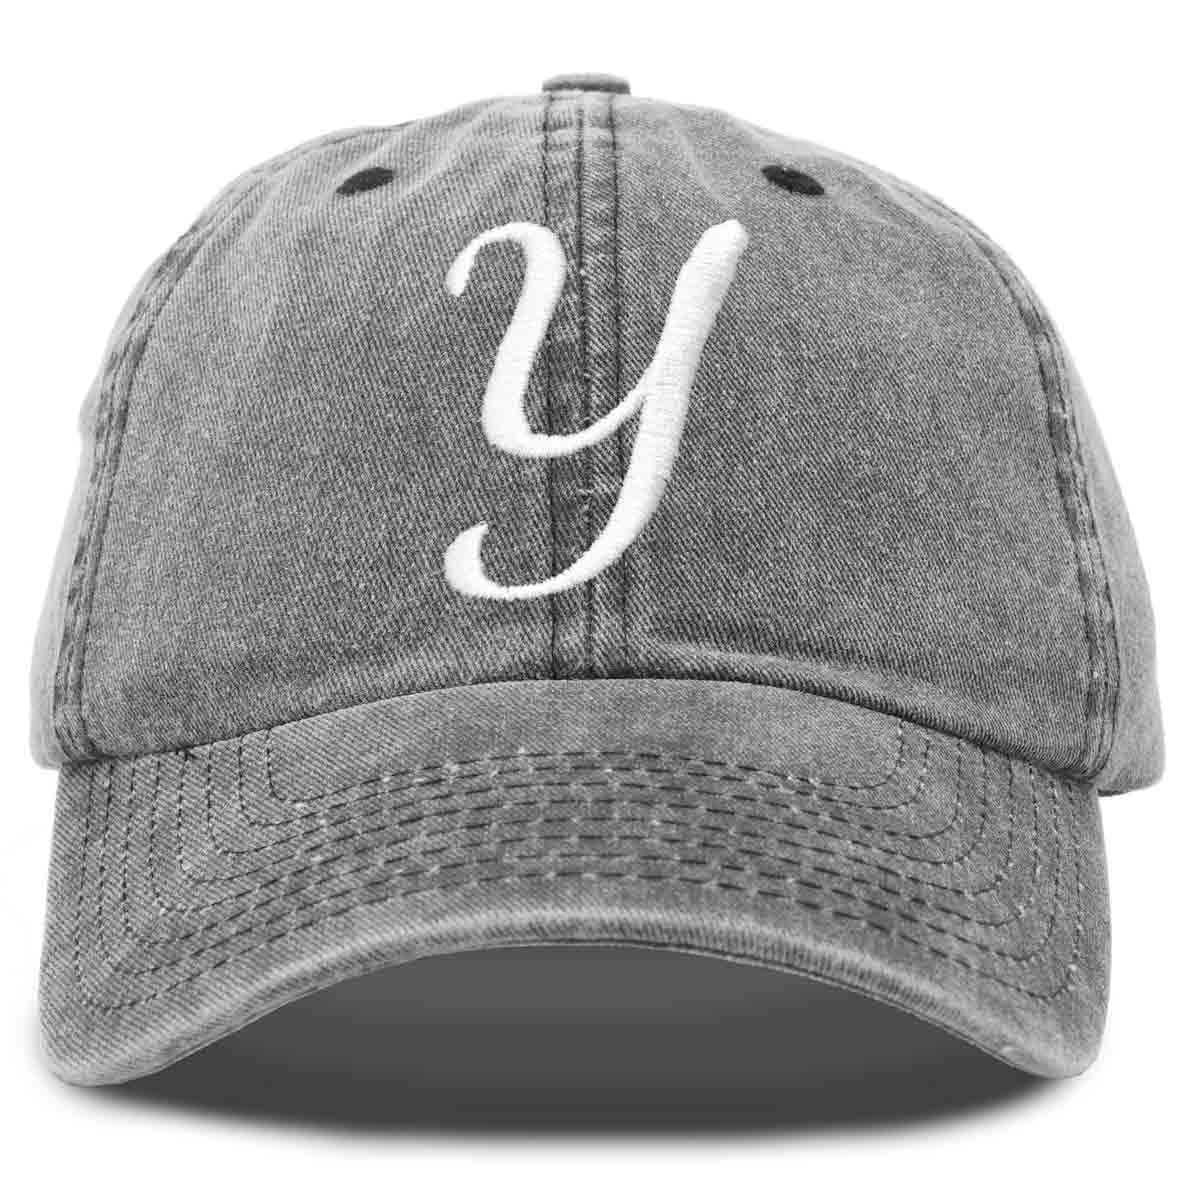 Dalix Initial Letter Y Hat